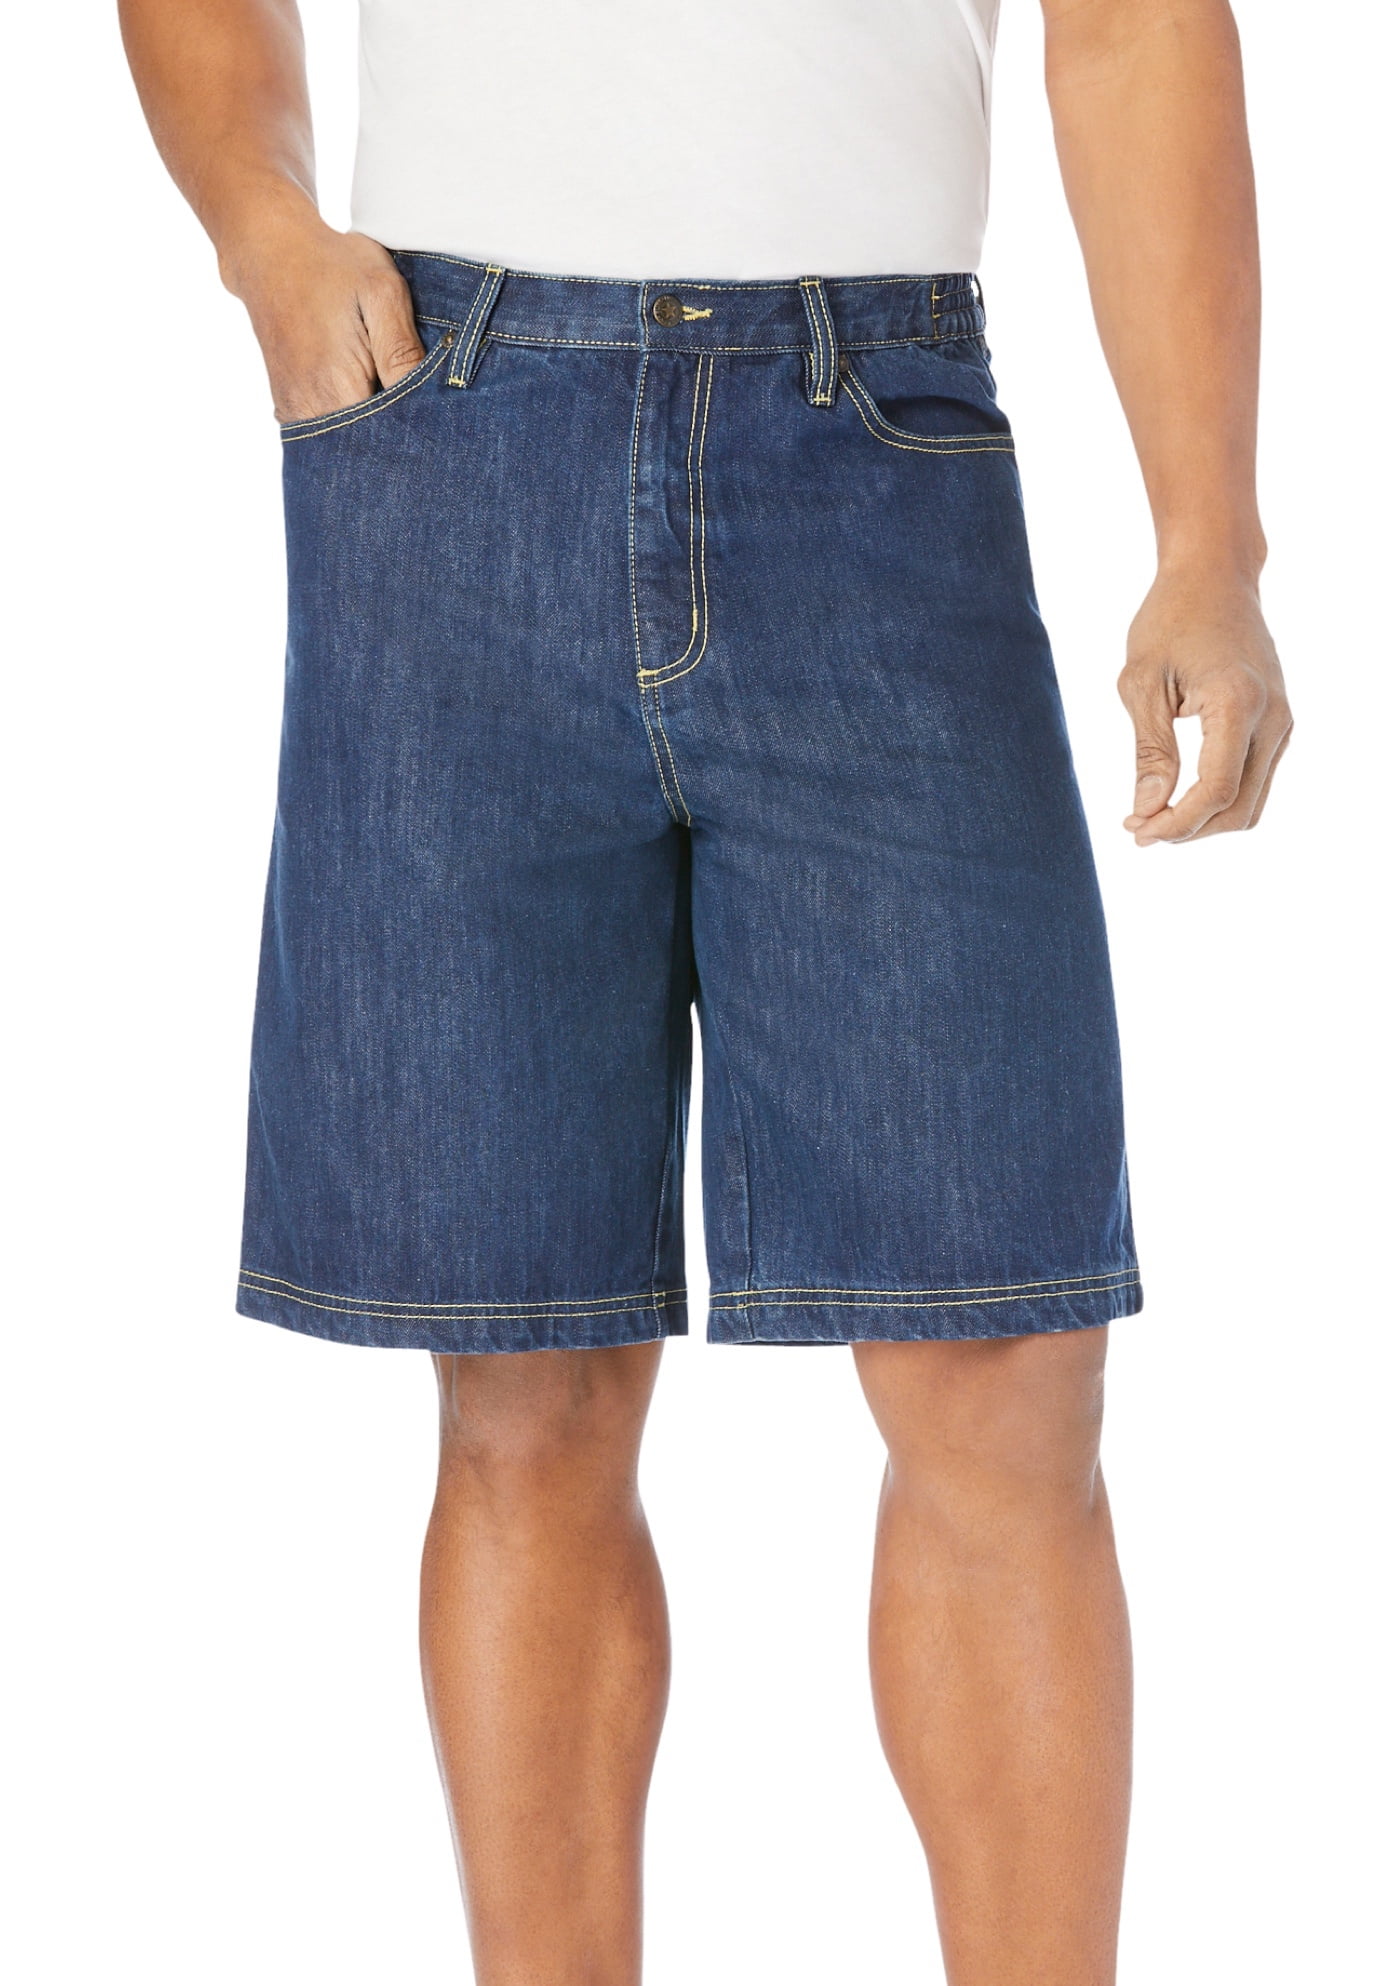 High Sierra Boys Blue Denim Indigo Shorts 5 pockets Size 12 New 